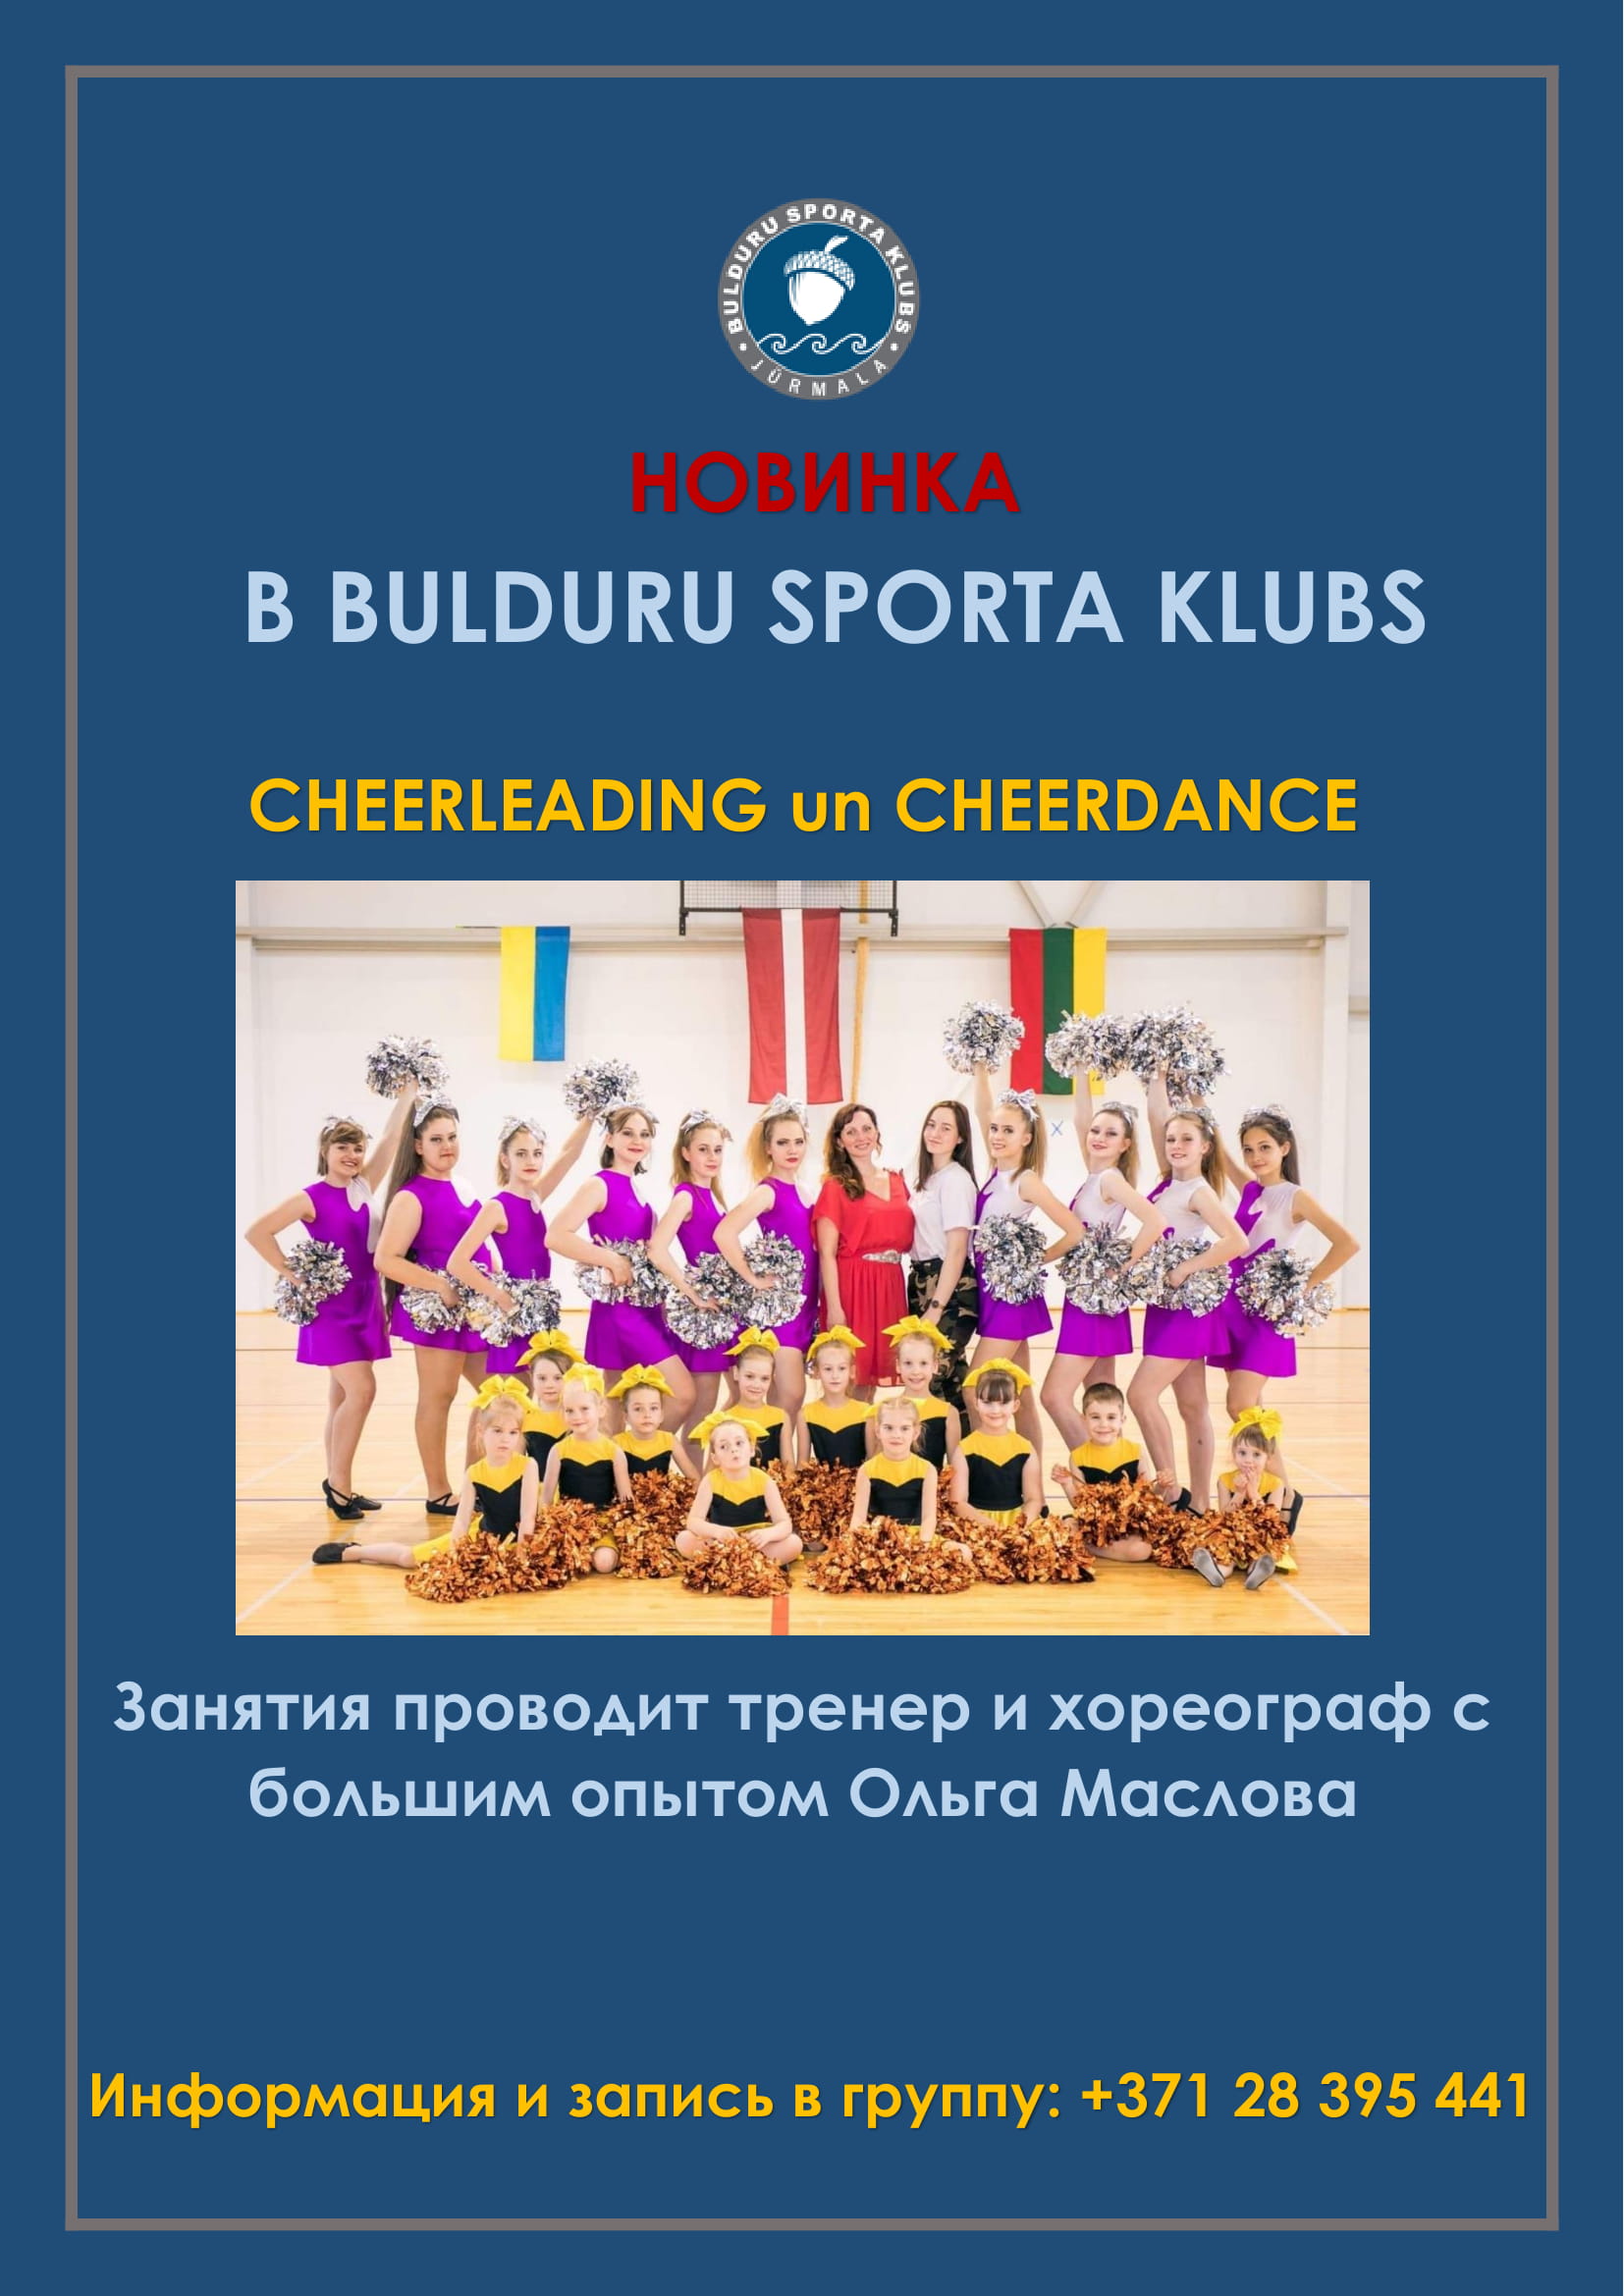 Cheerleading/Cheerdance в Bulduru sporta klubs